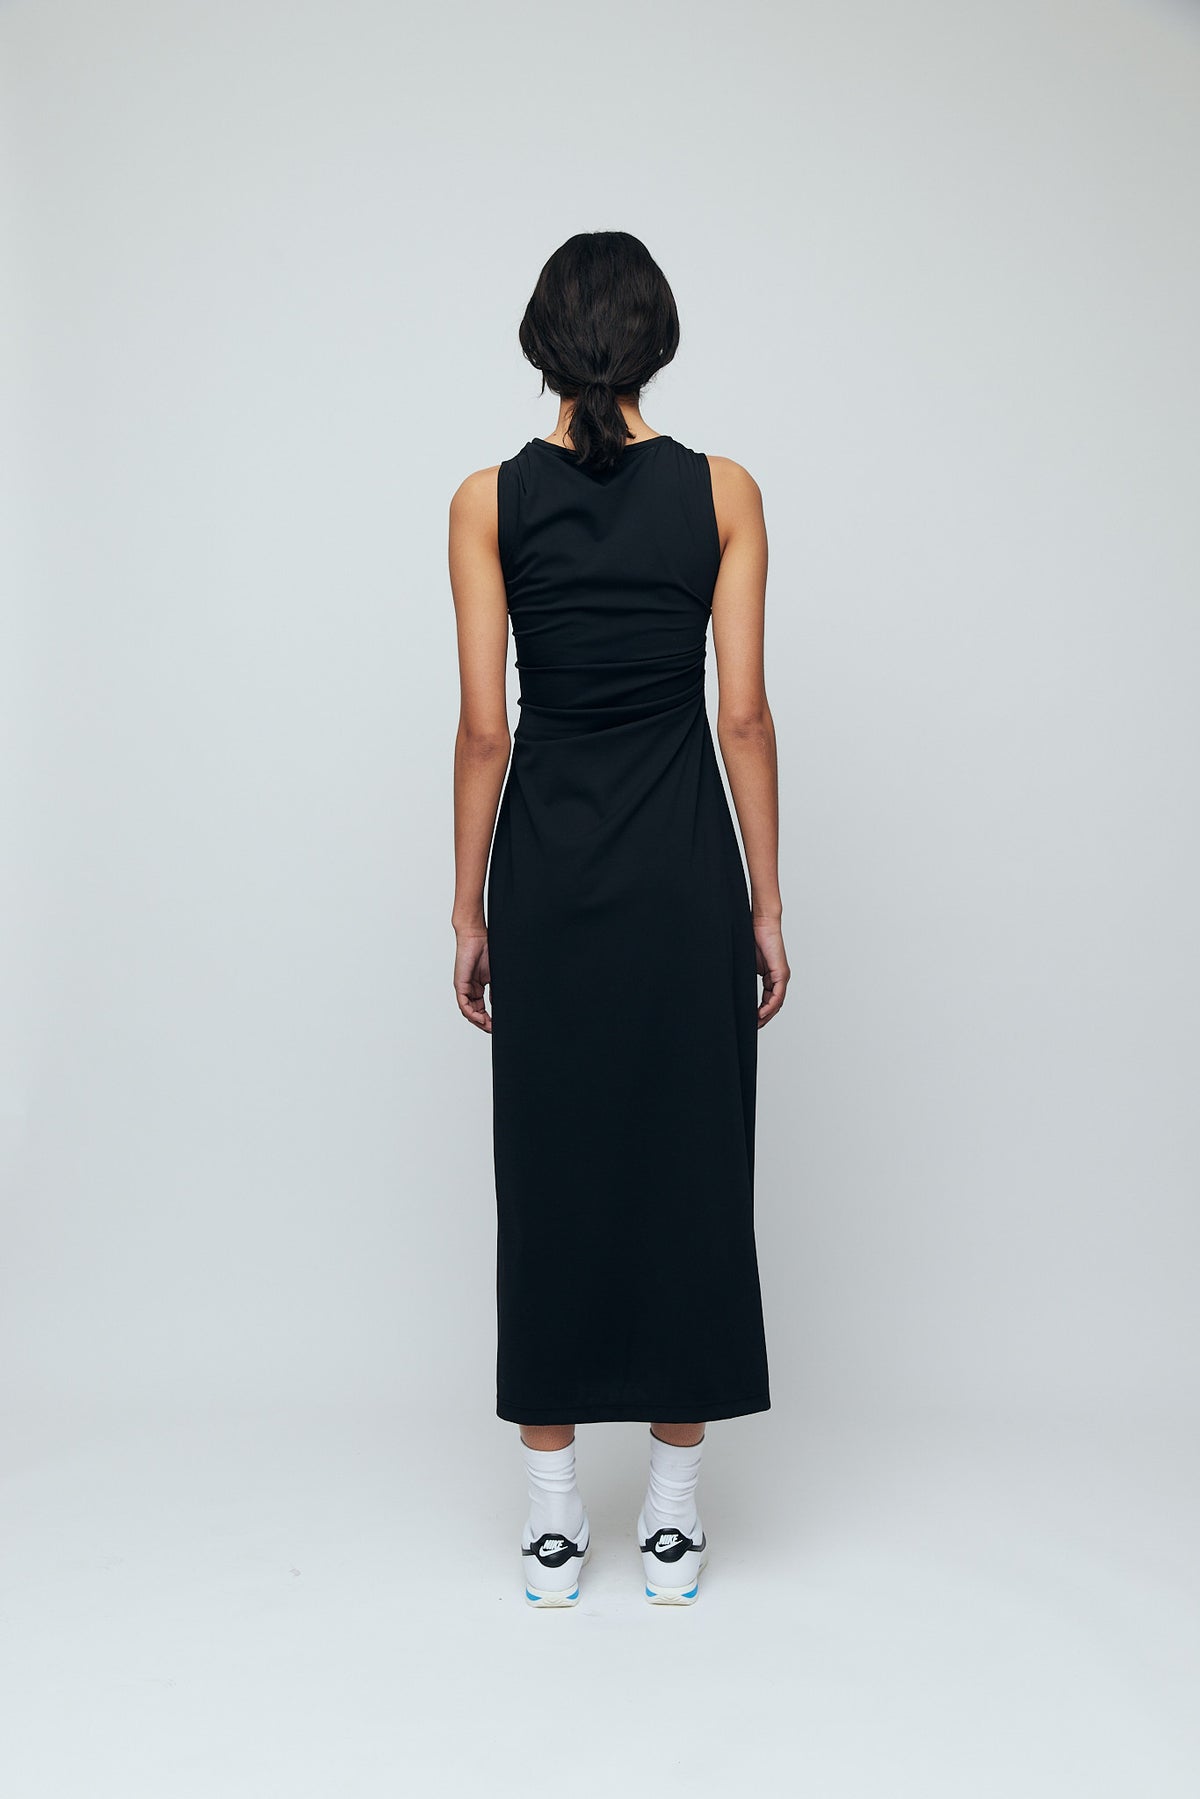 Wynn Hamlyn Monica Tank Dress // Black